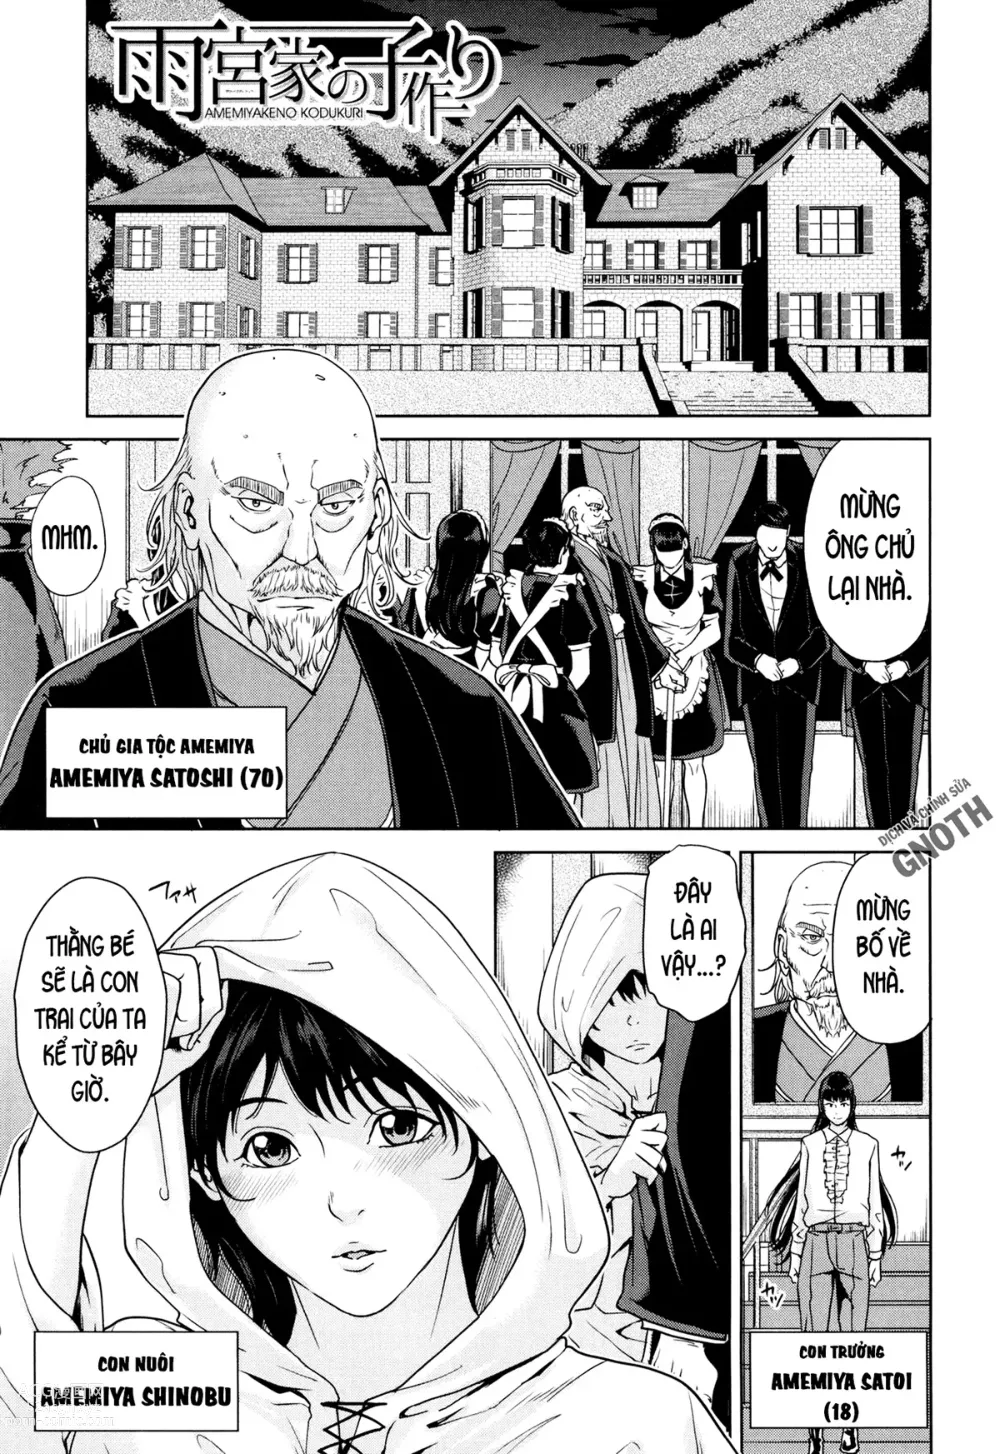 Page 6 of manga Amemiyakeno Kodukuri